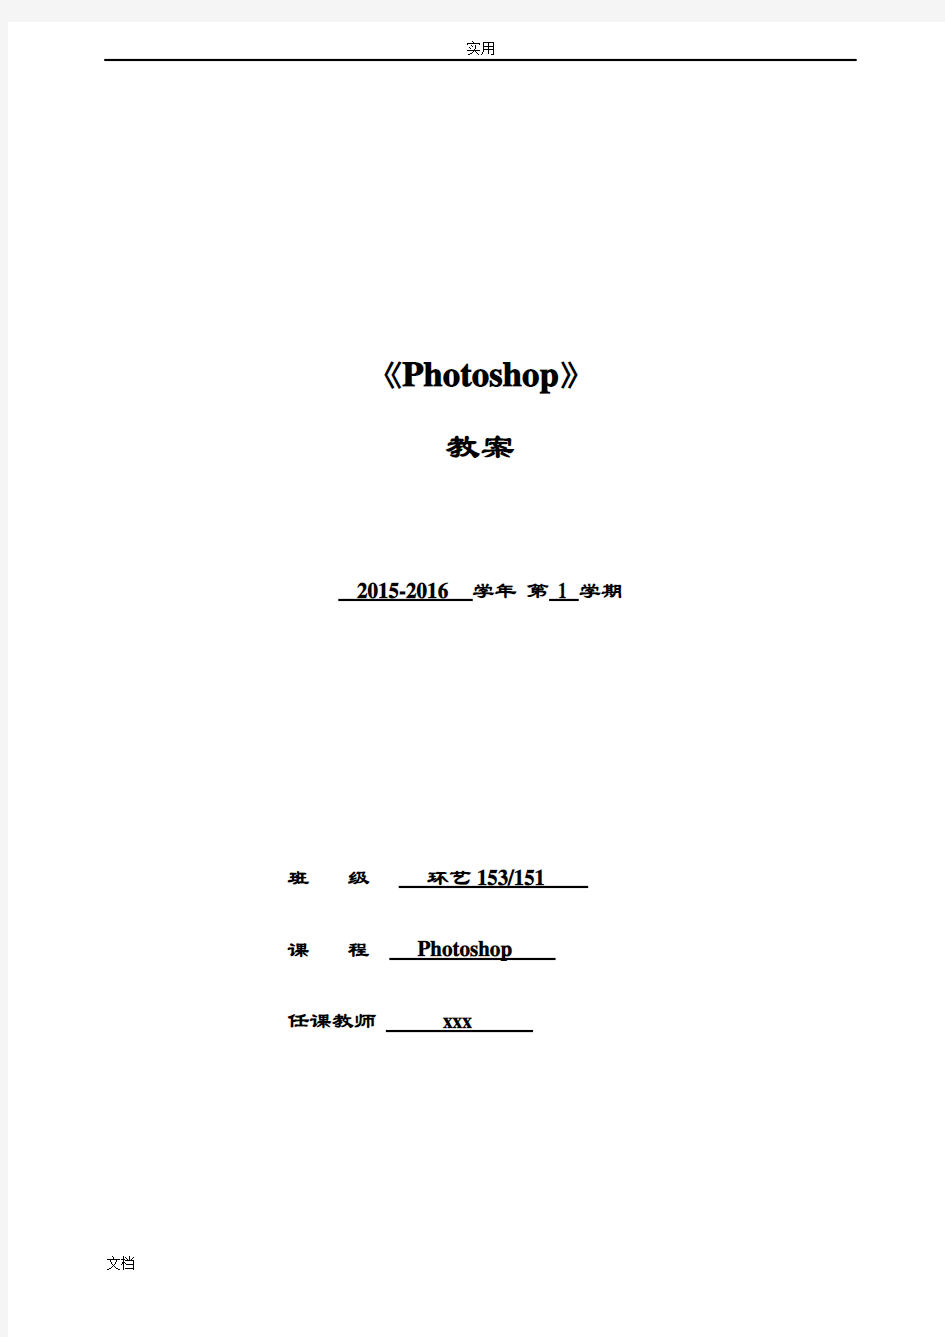 Photoshop教学案(完整版)